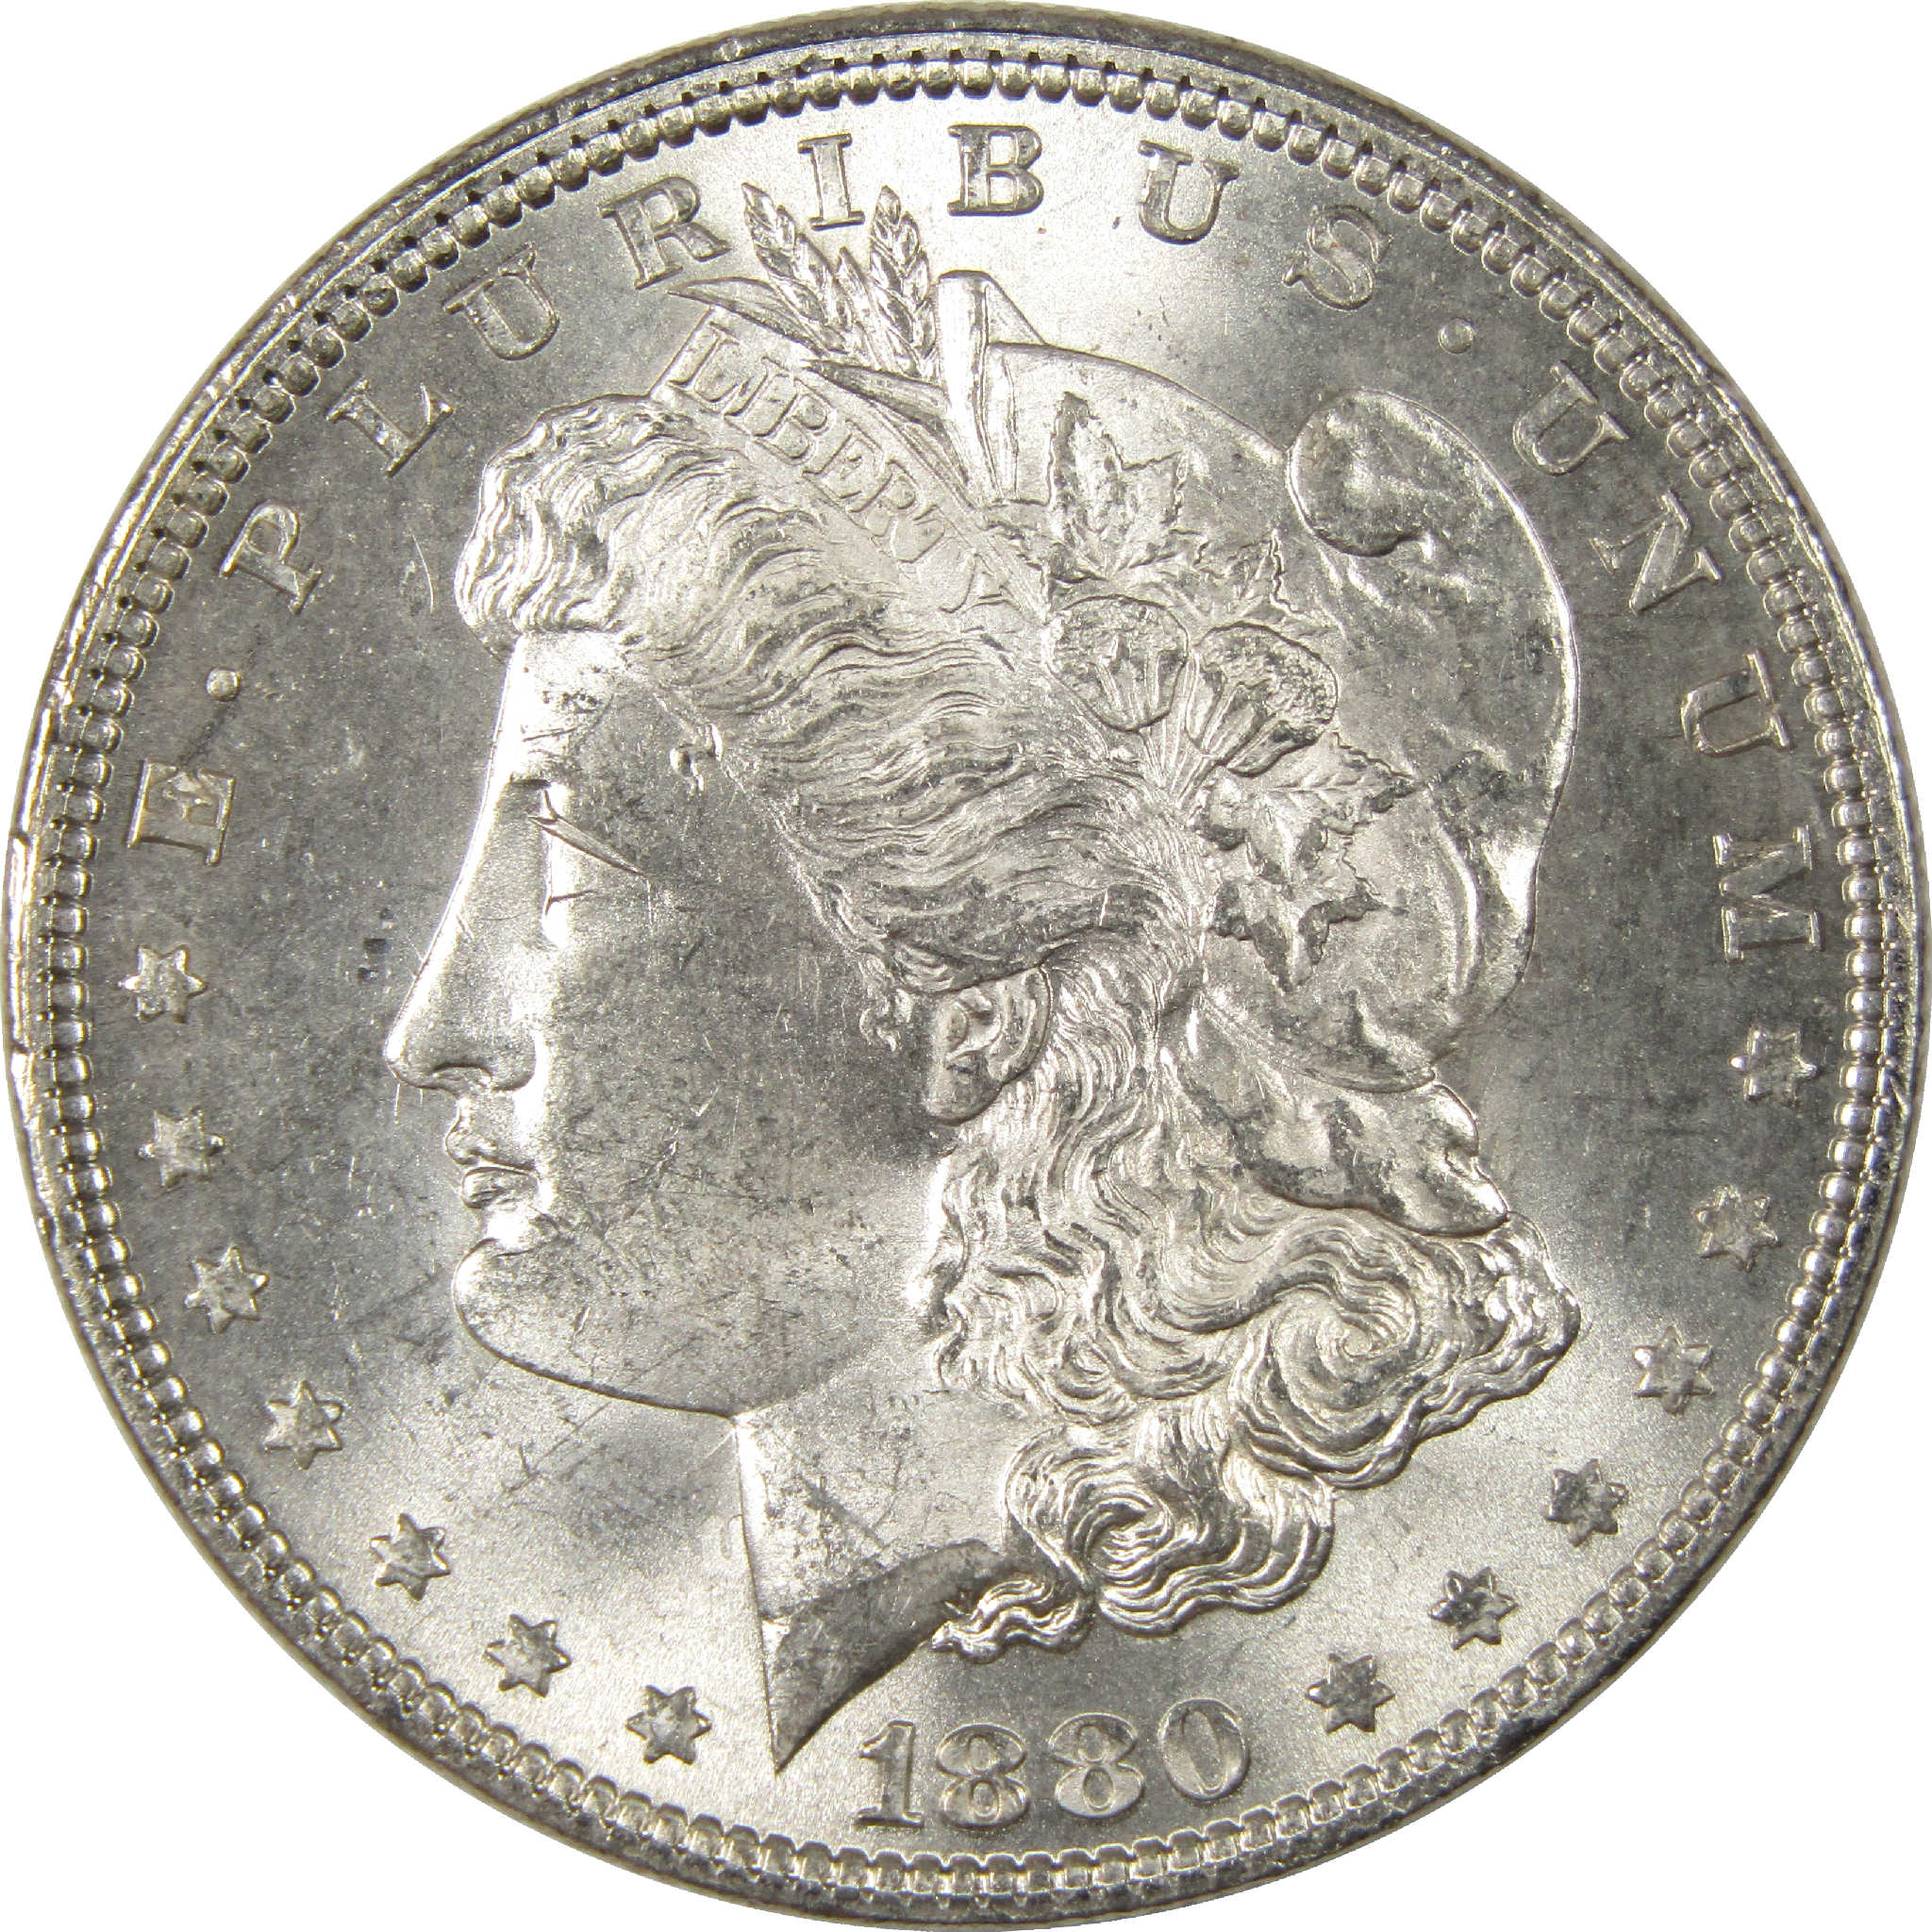 1880 Morgan Dollar BU Choice Uncirculated Silver $1 Coin - Morgan coin - Morgan silver dollar - Morgan silver dollar for sale - Profile Coins &amp; Collectibles